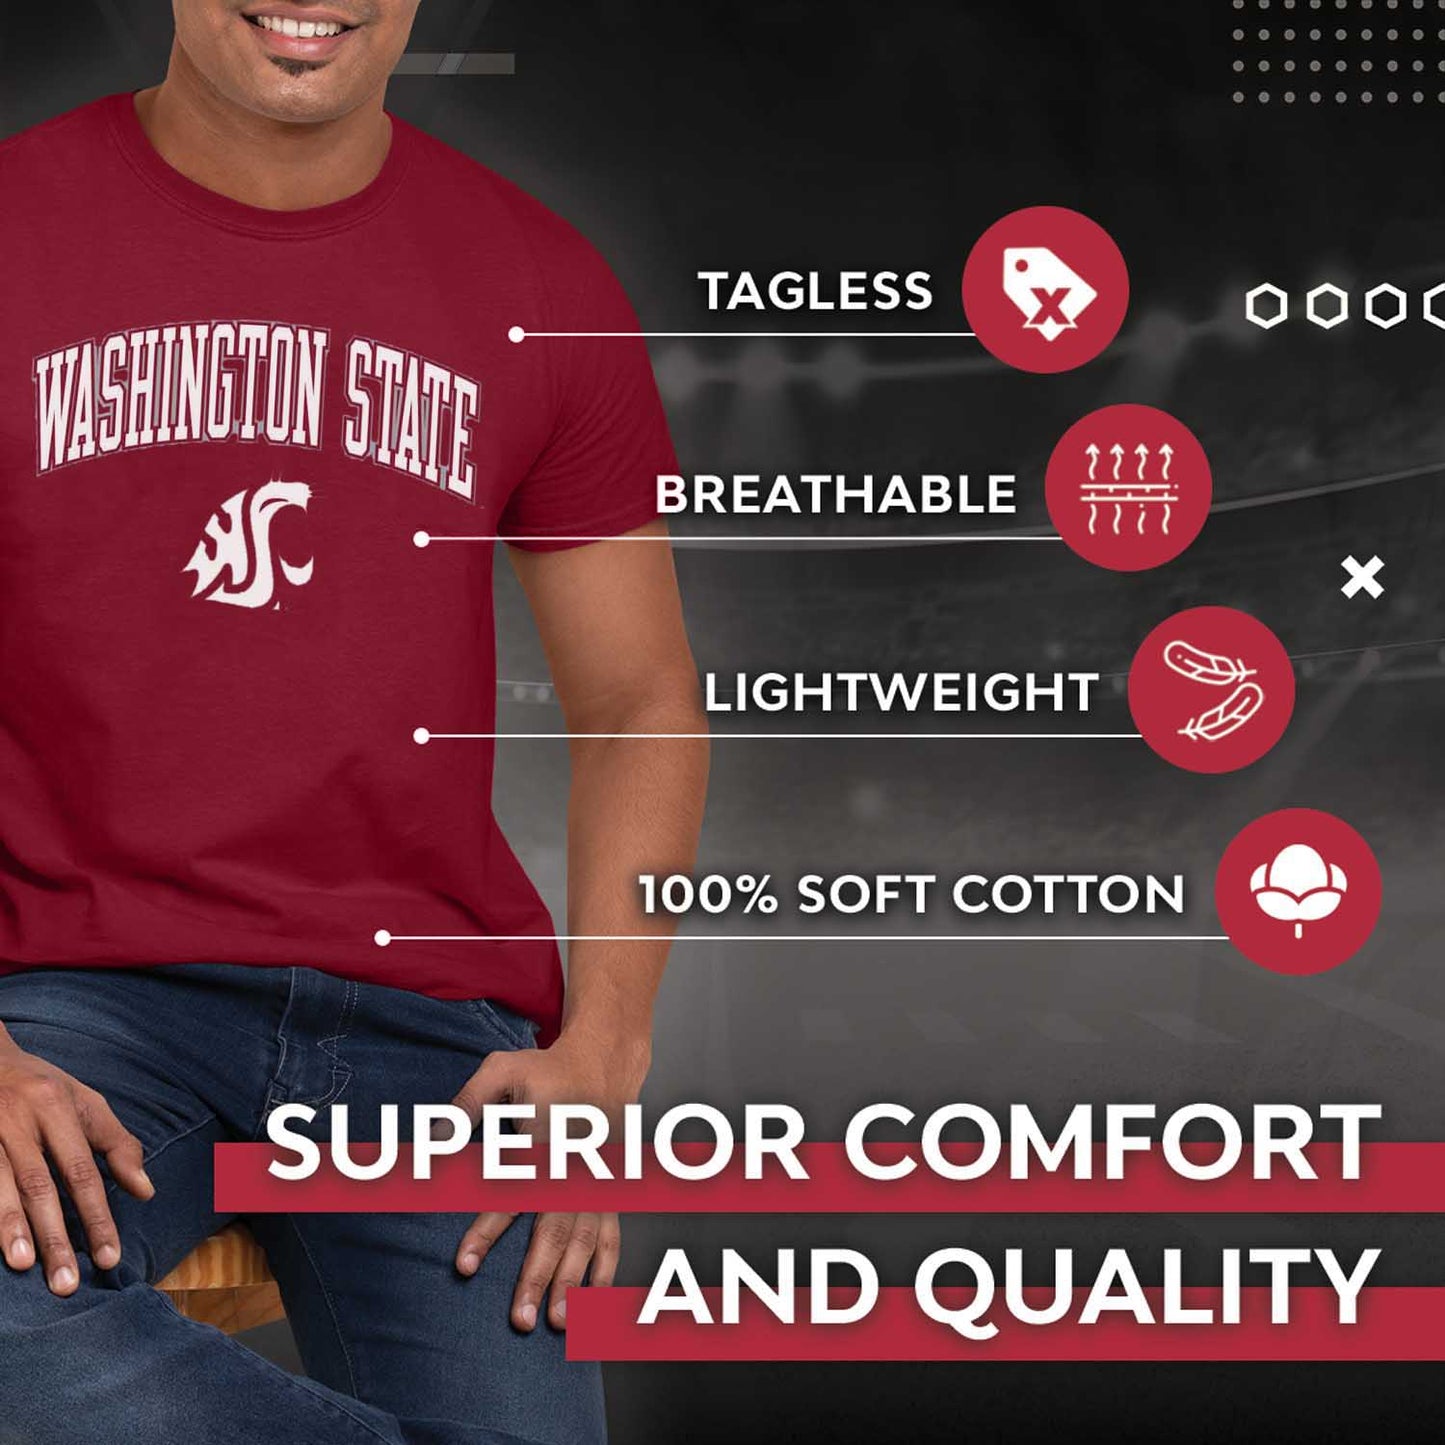 Washington State Cougars NCAA Adult Gameday Cotton T-Shirt - Cardinal